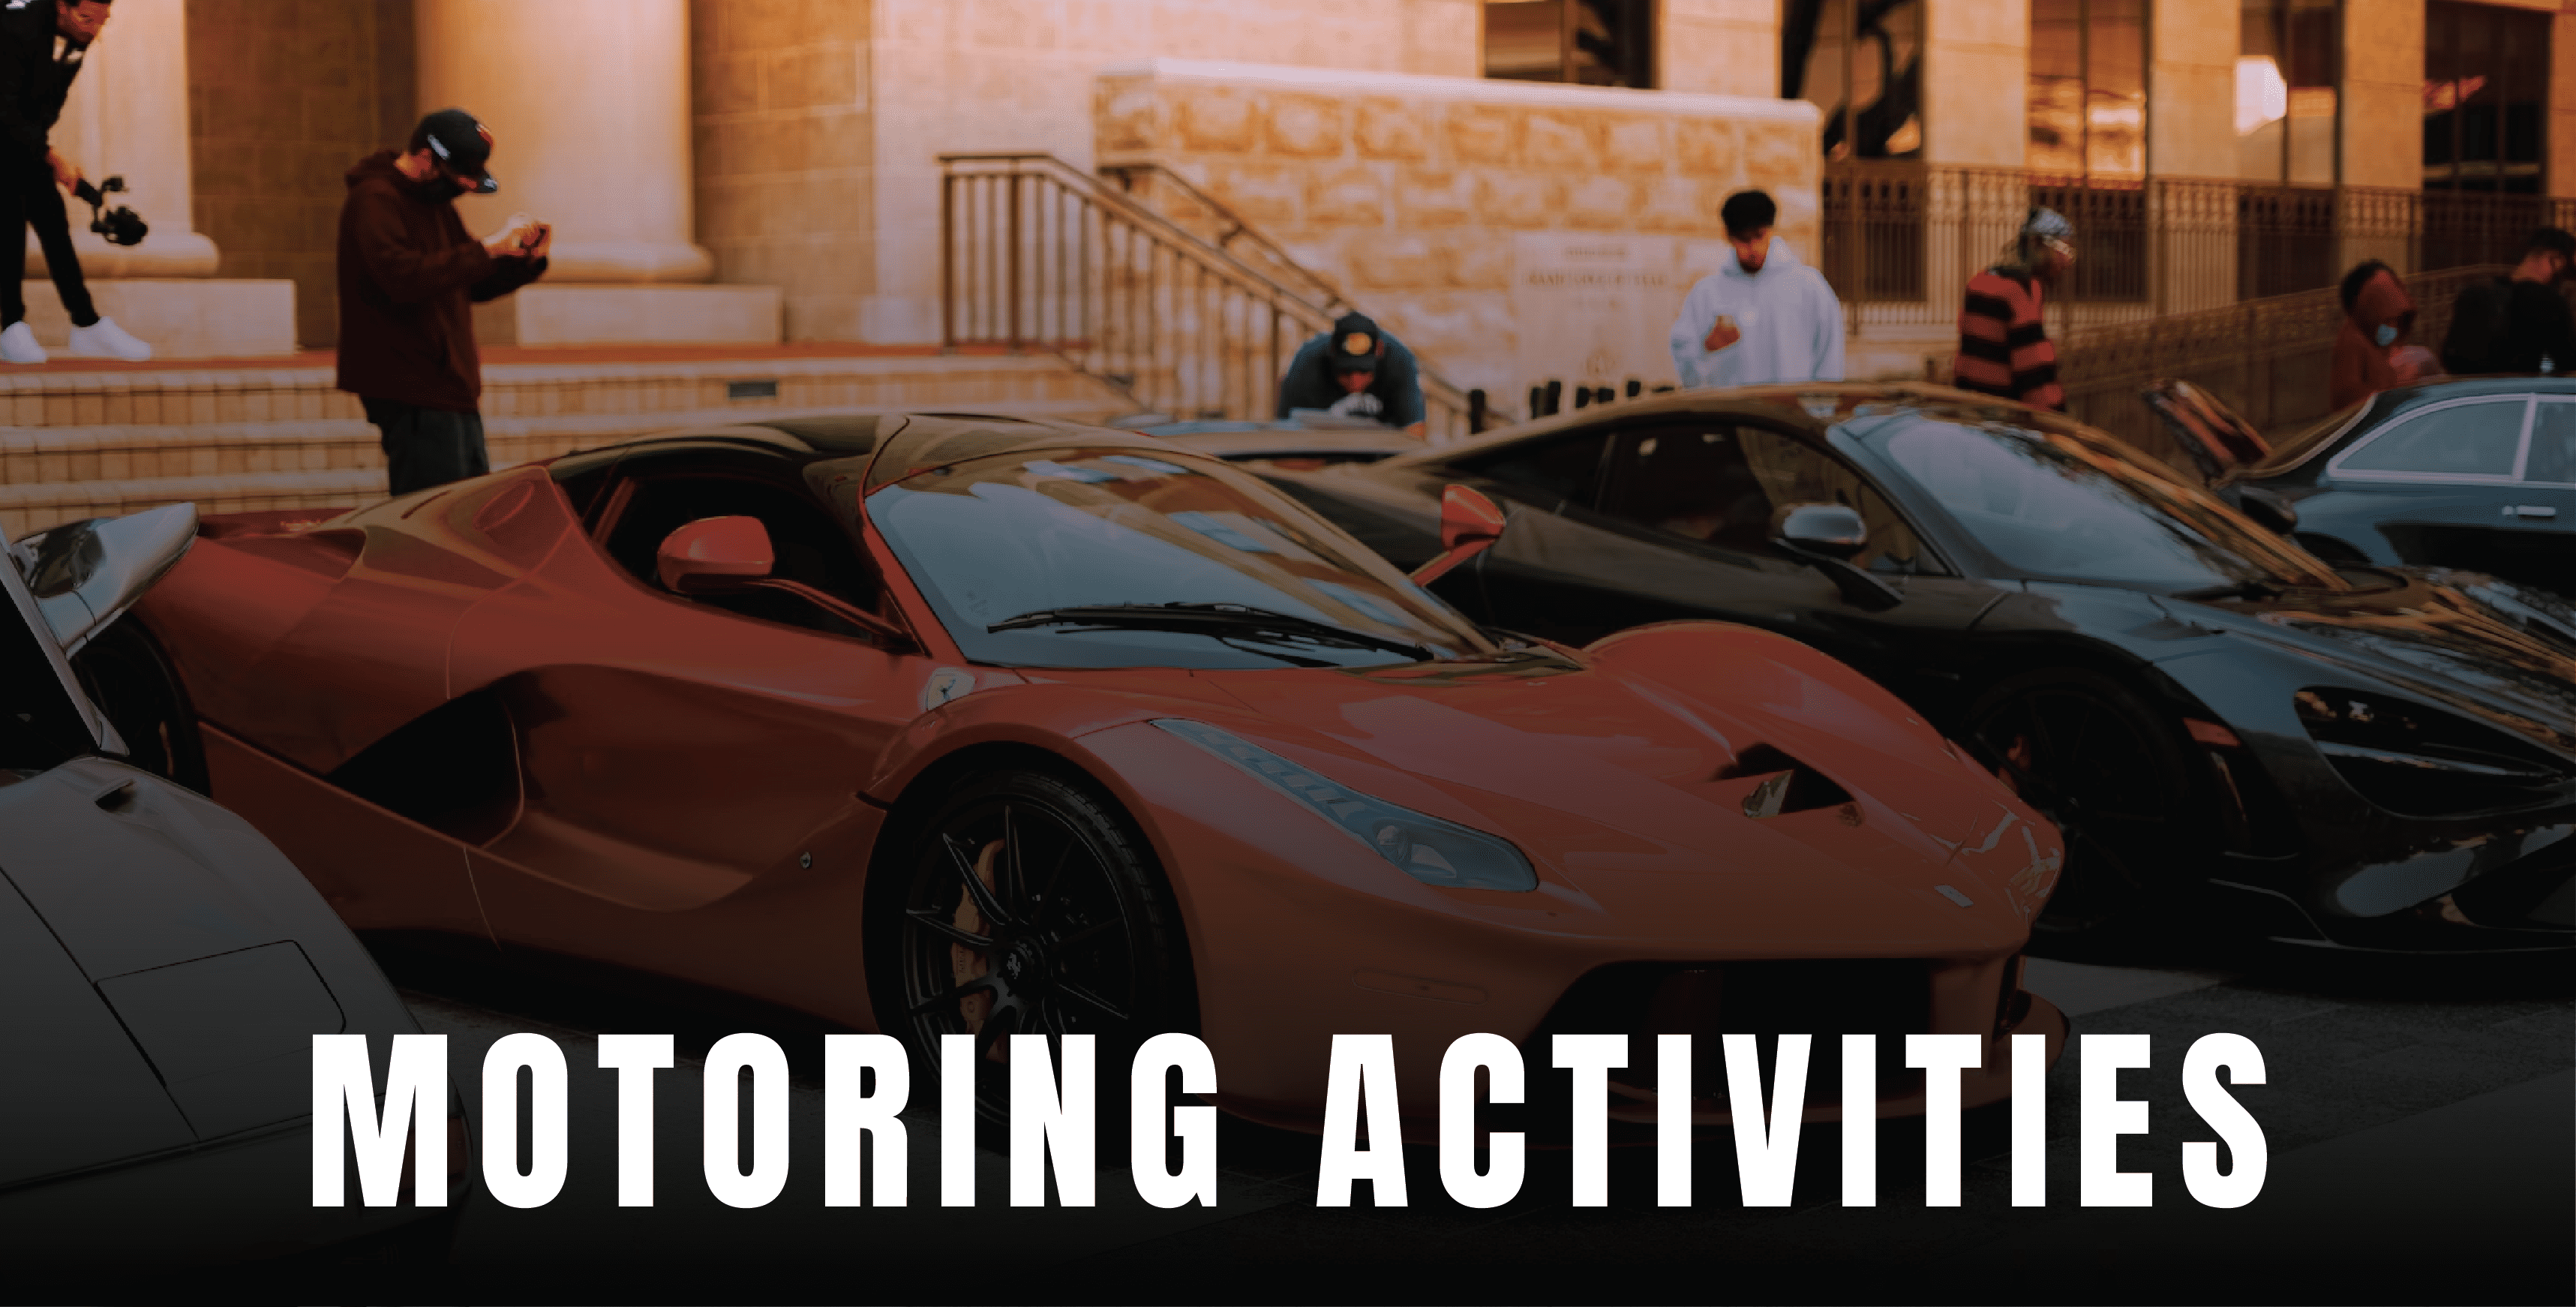 Motorsports and motoring activities